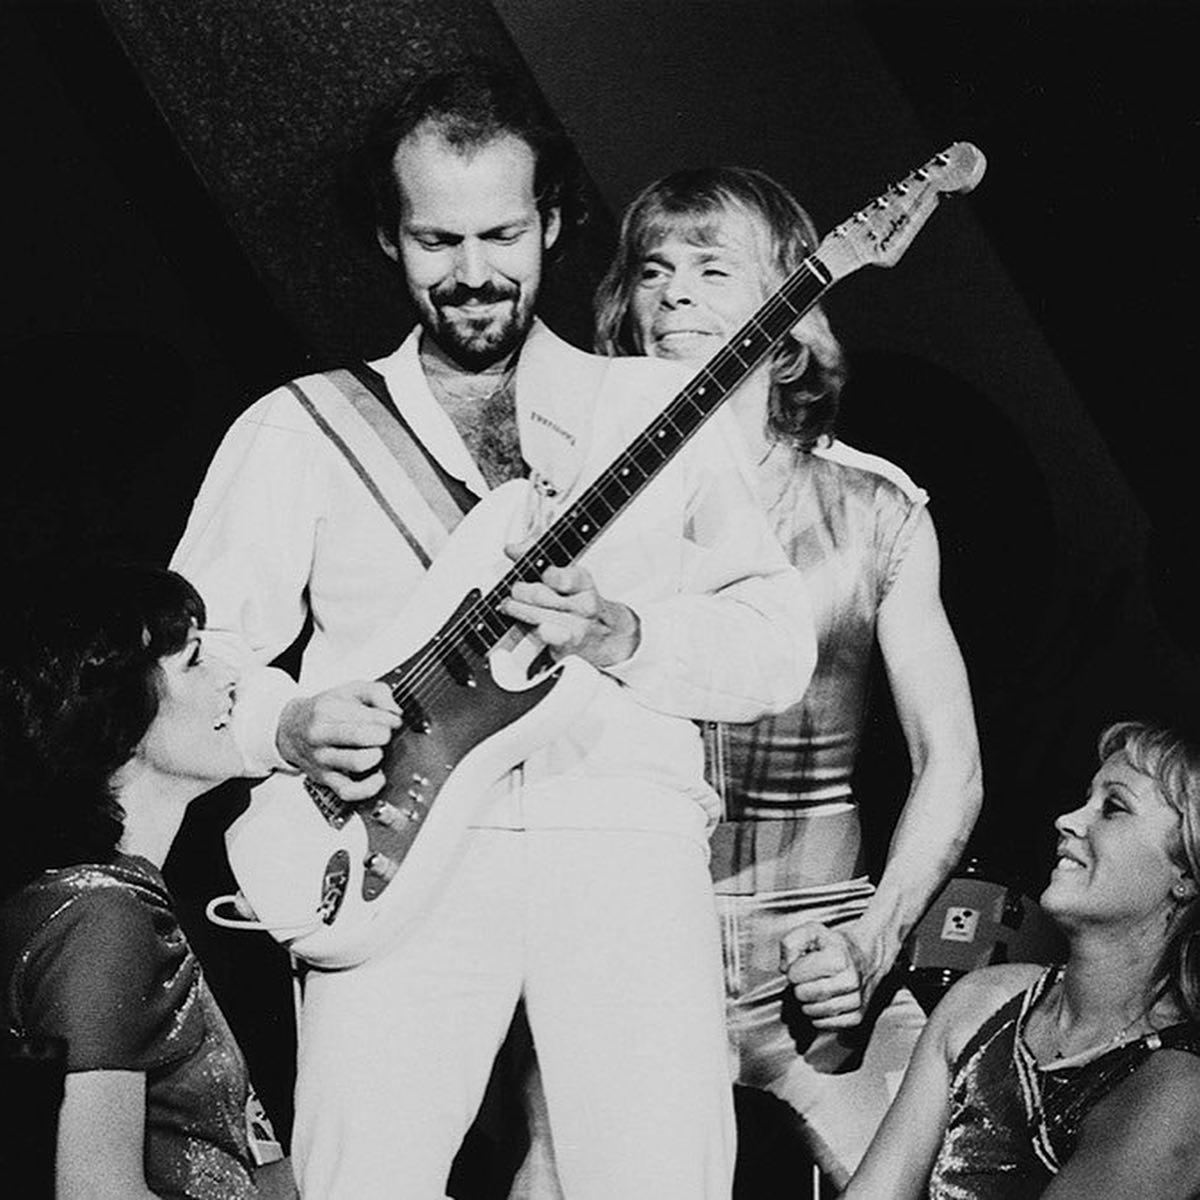 Lasse Wellander guitarrista de ABBA